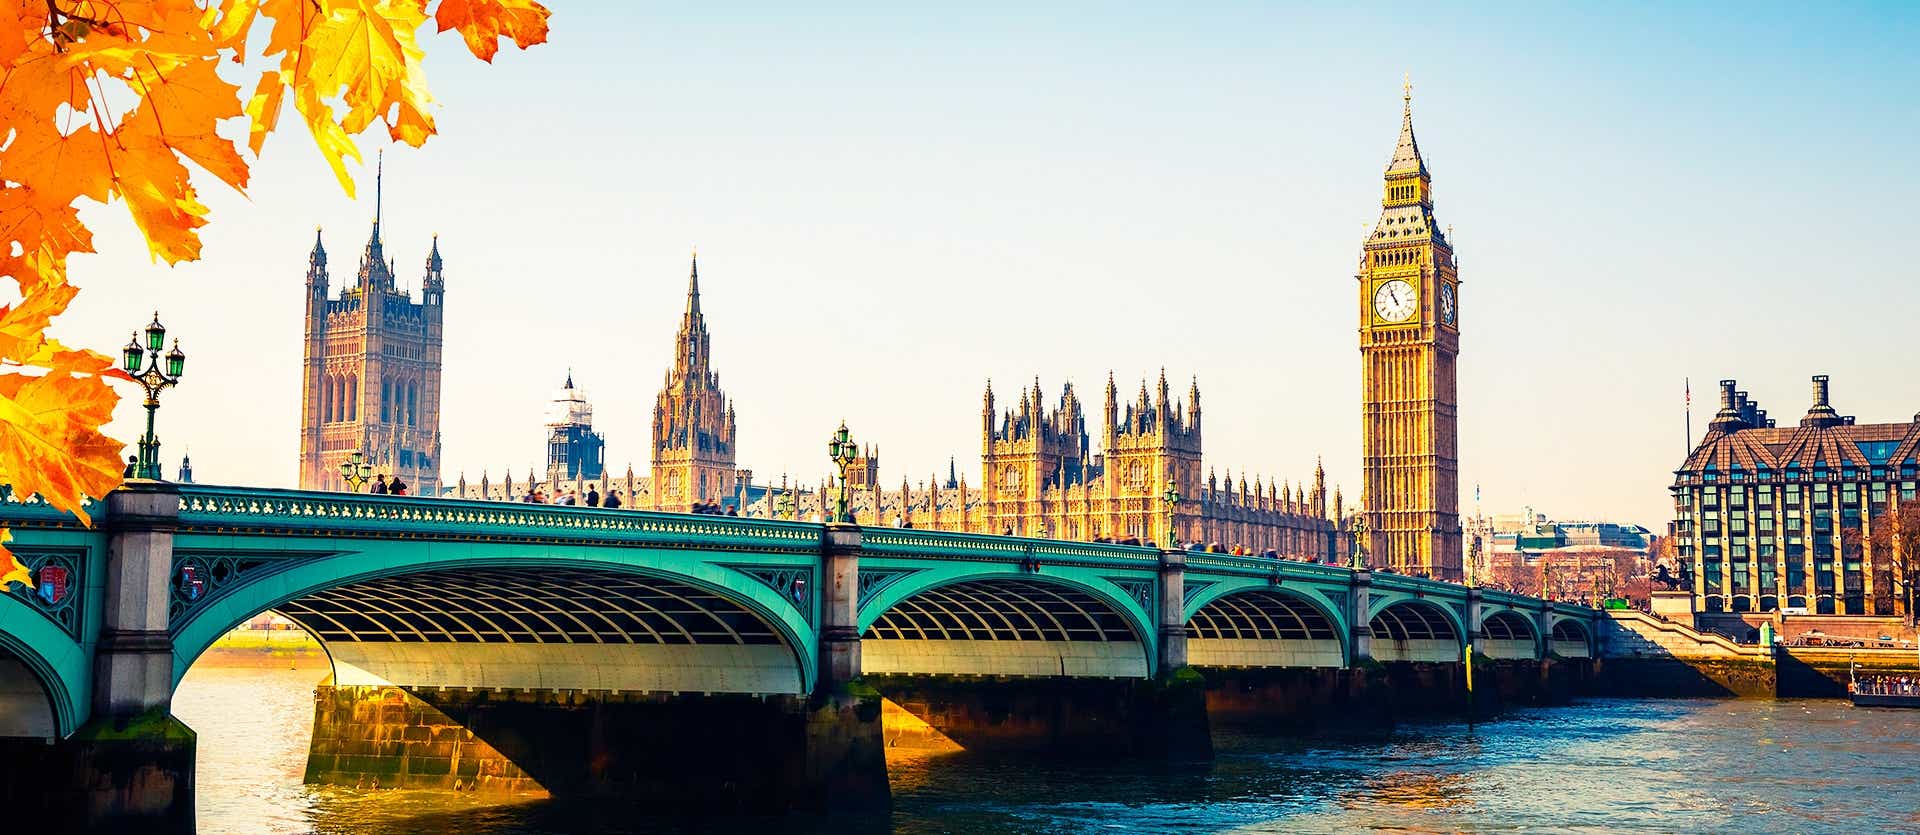 Houses of Parliament & Big Ben <span class="iconos separador"></span> London <span class="iconos separador"></span> England